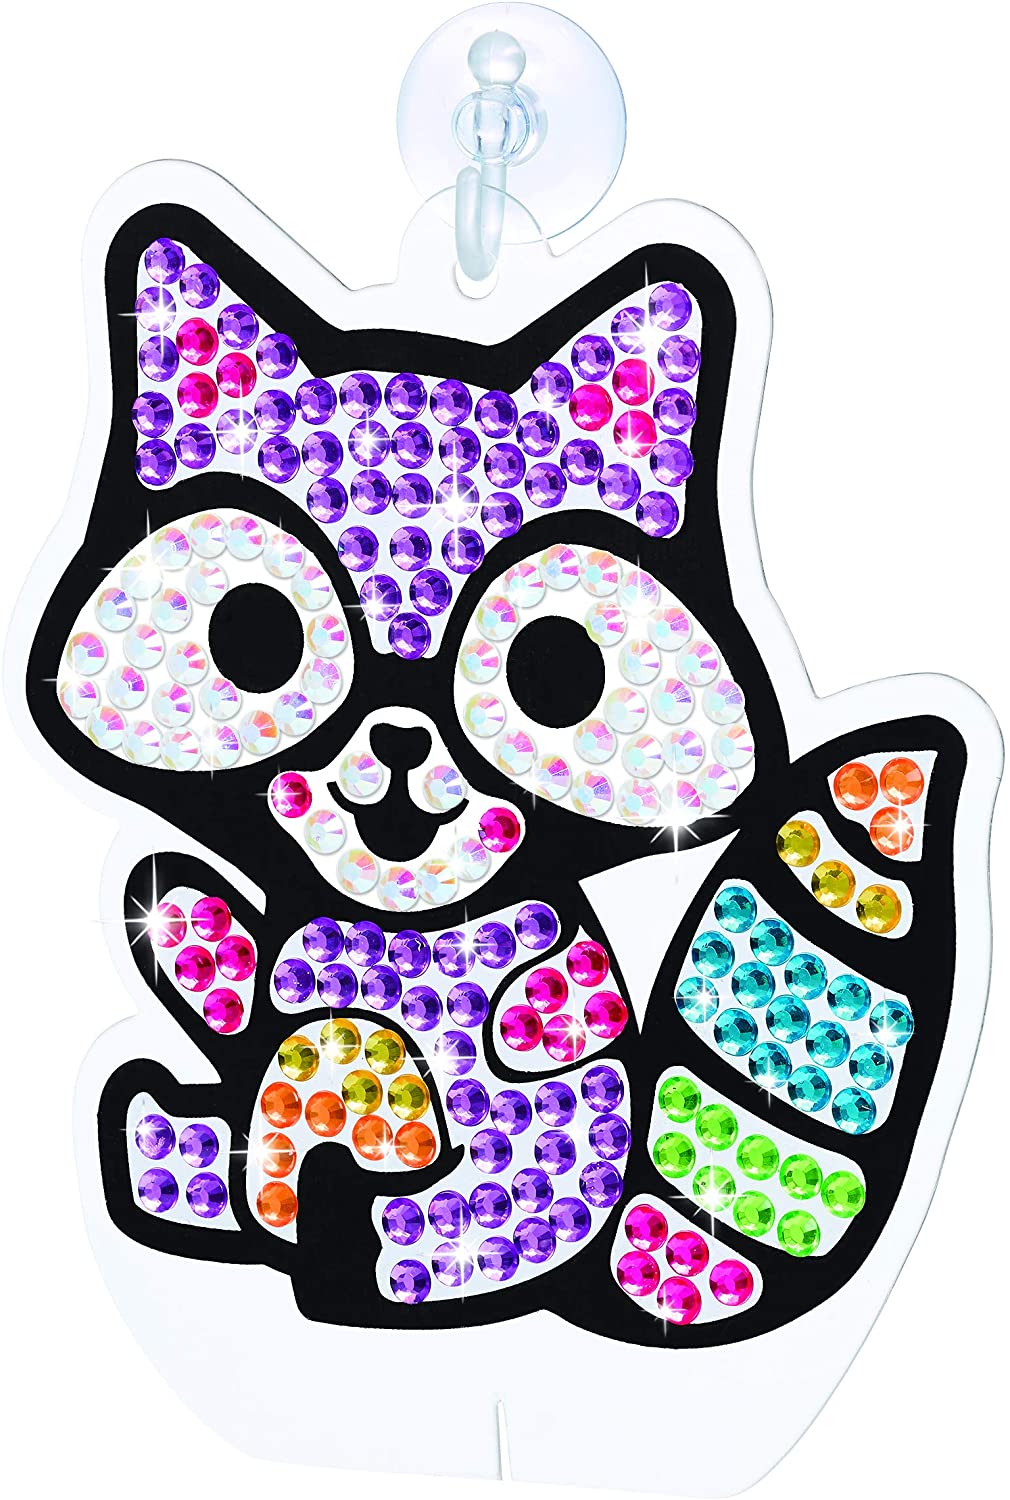 JOYIN Kids Diamond Art, Big Gem Diamond Painting Kit with 18 Magical Stickers 3 Suncatchers 2 Keychains, Diamond Art for Kids, DIY Paint Arts Supplies